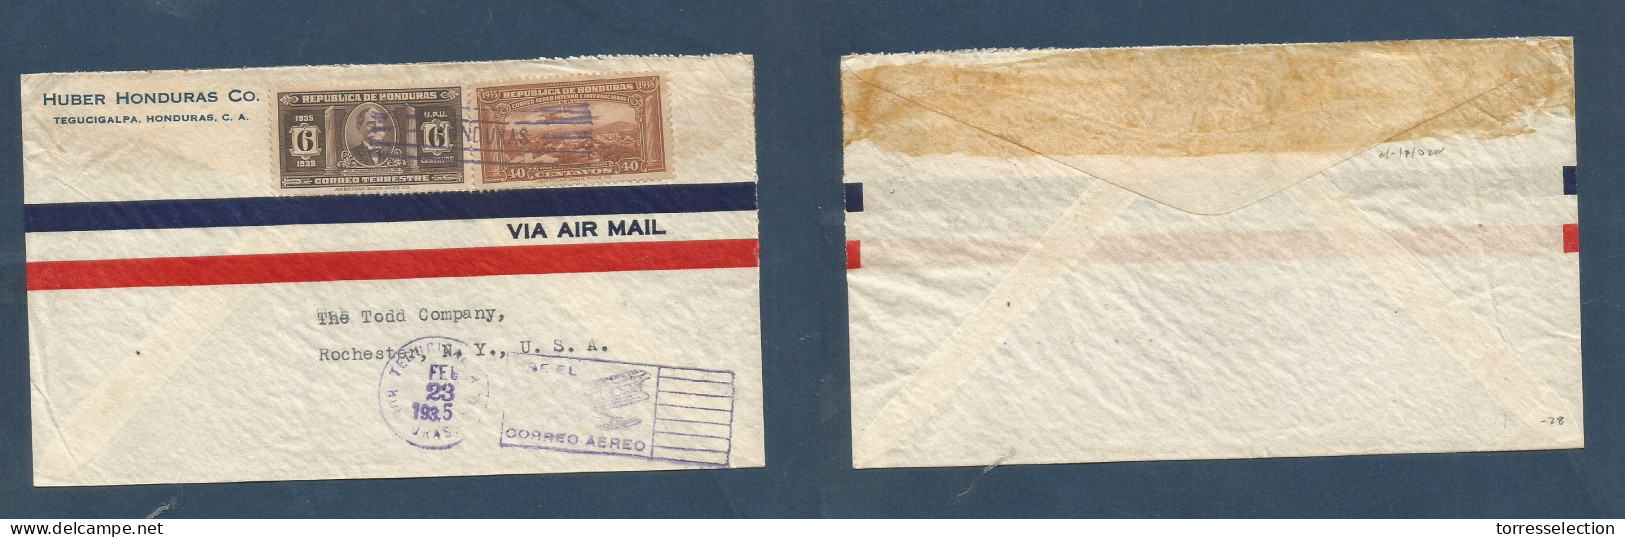 HONDURAS. 1935 (23 Febr) Tegucigalpa - USA, Rochester, NY. Air Multifkd Env. Nice Usage. XSALE. - Honduras